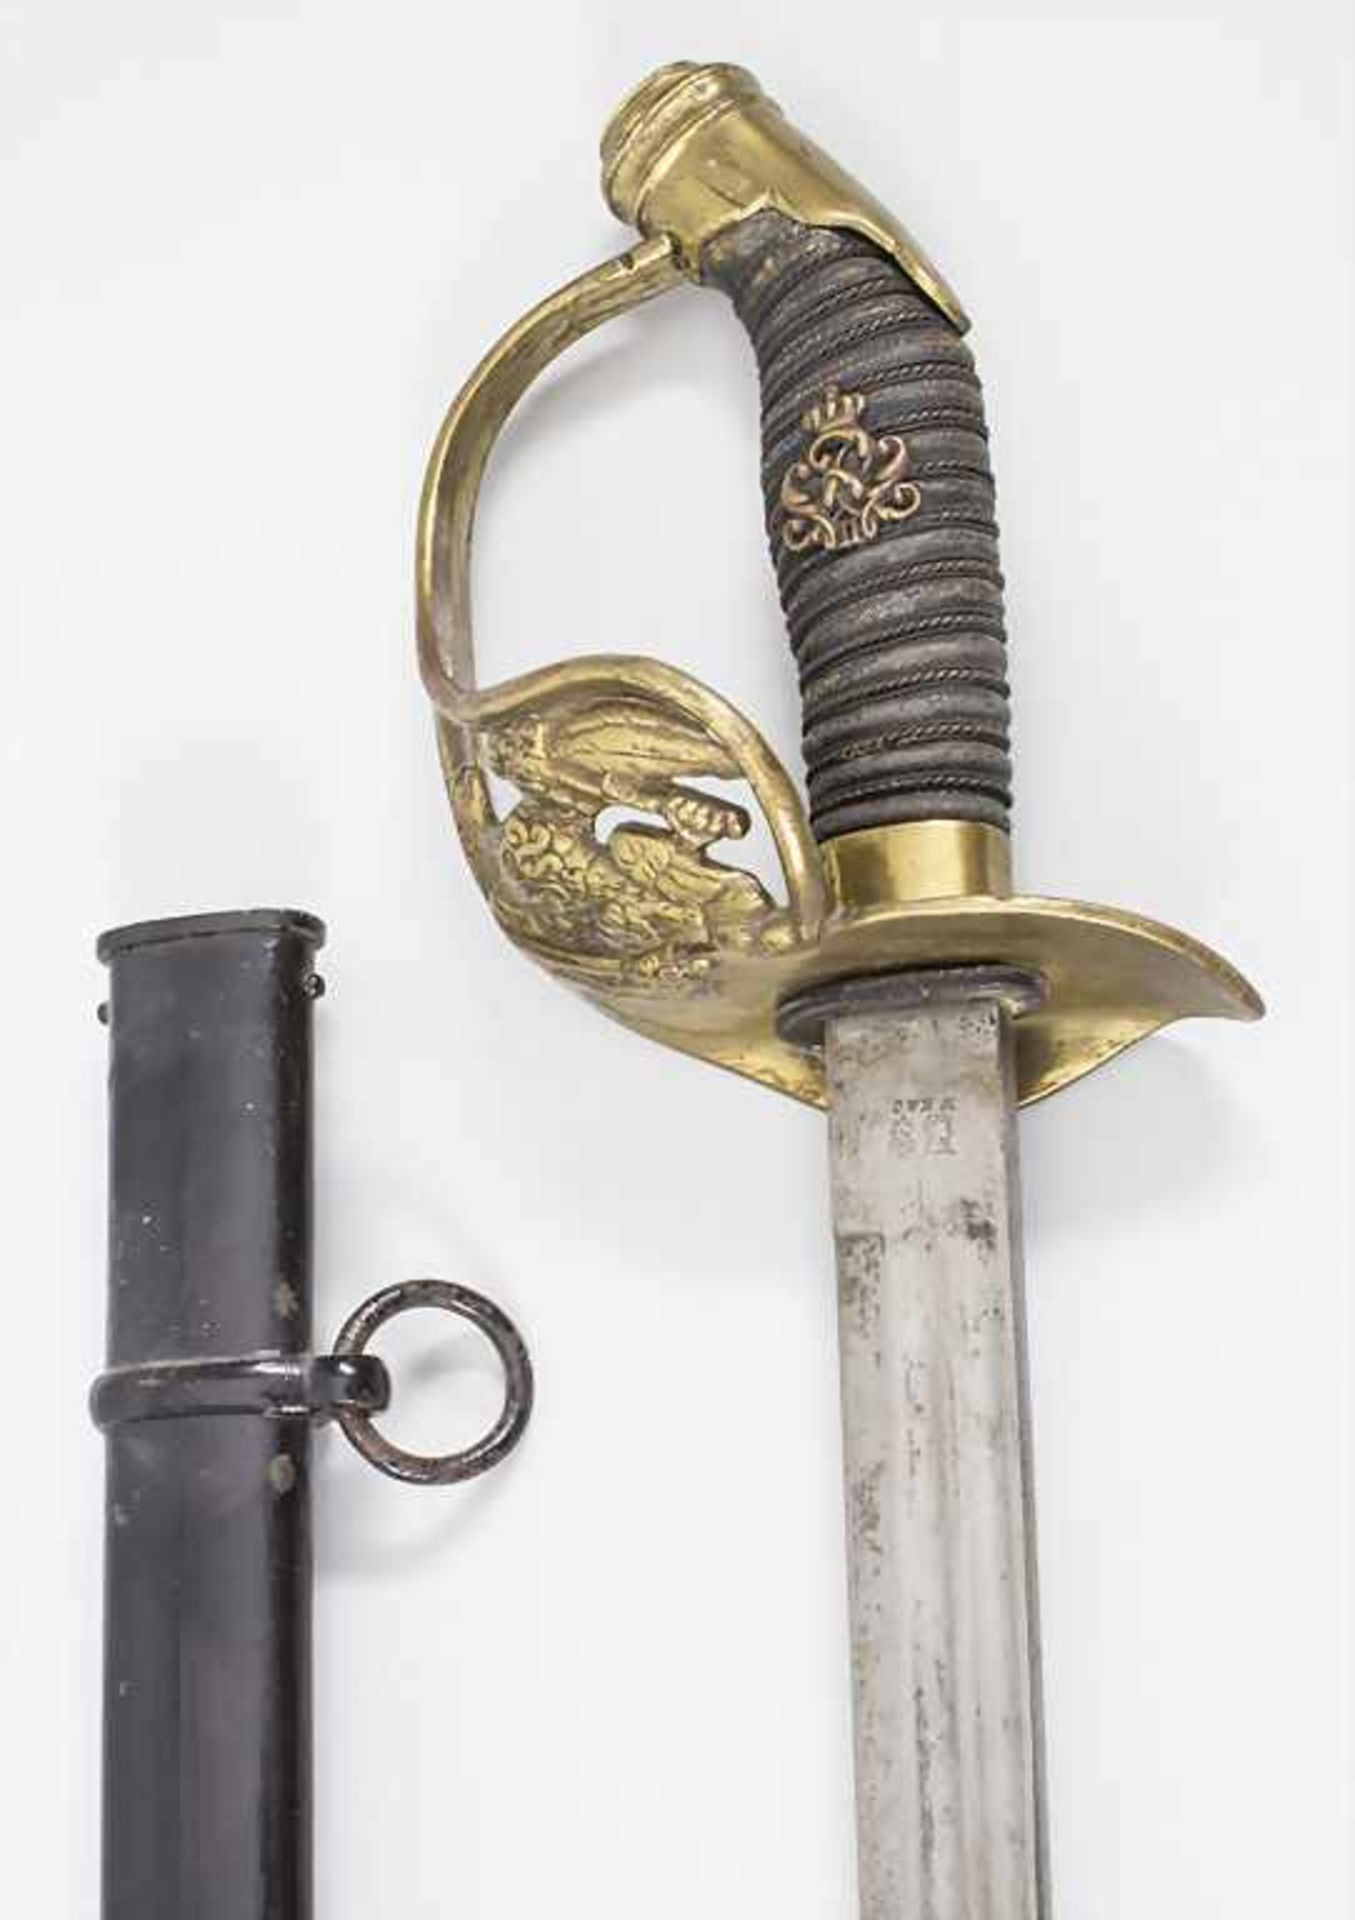 Infanterie Offiziersdegen / A infantry officer's sword, Preußen, Modell 1889 - Image 6 of 7